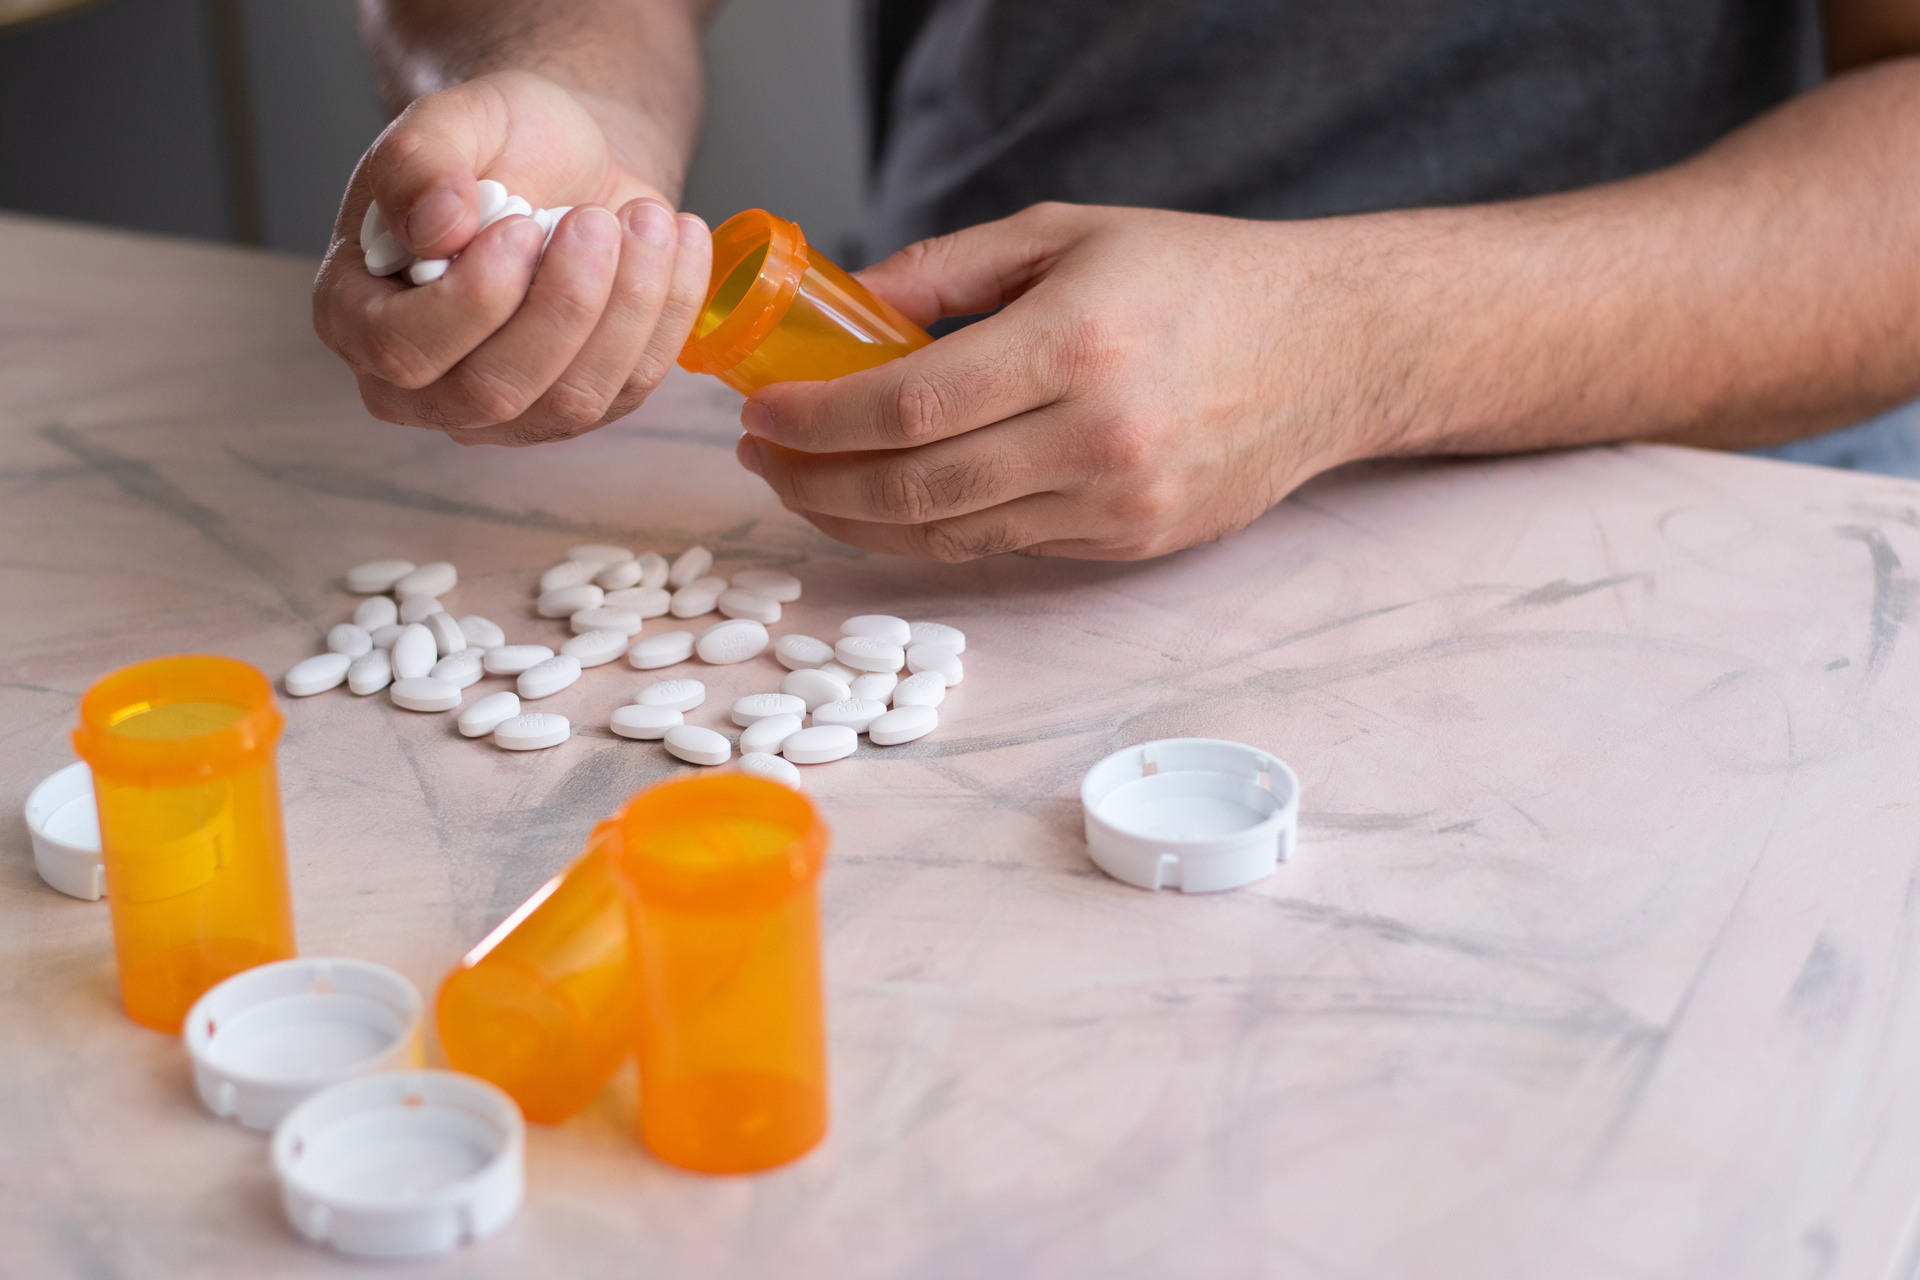 prescription drugs and teens